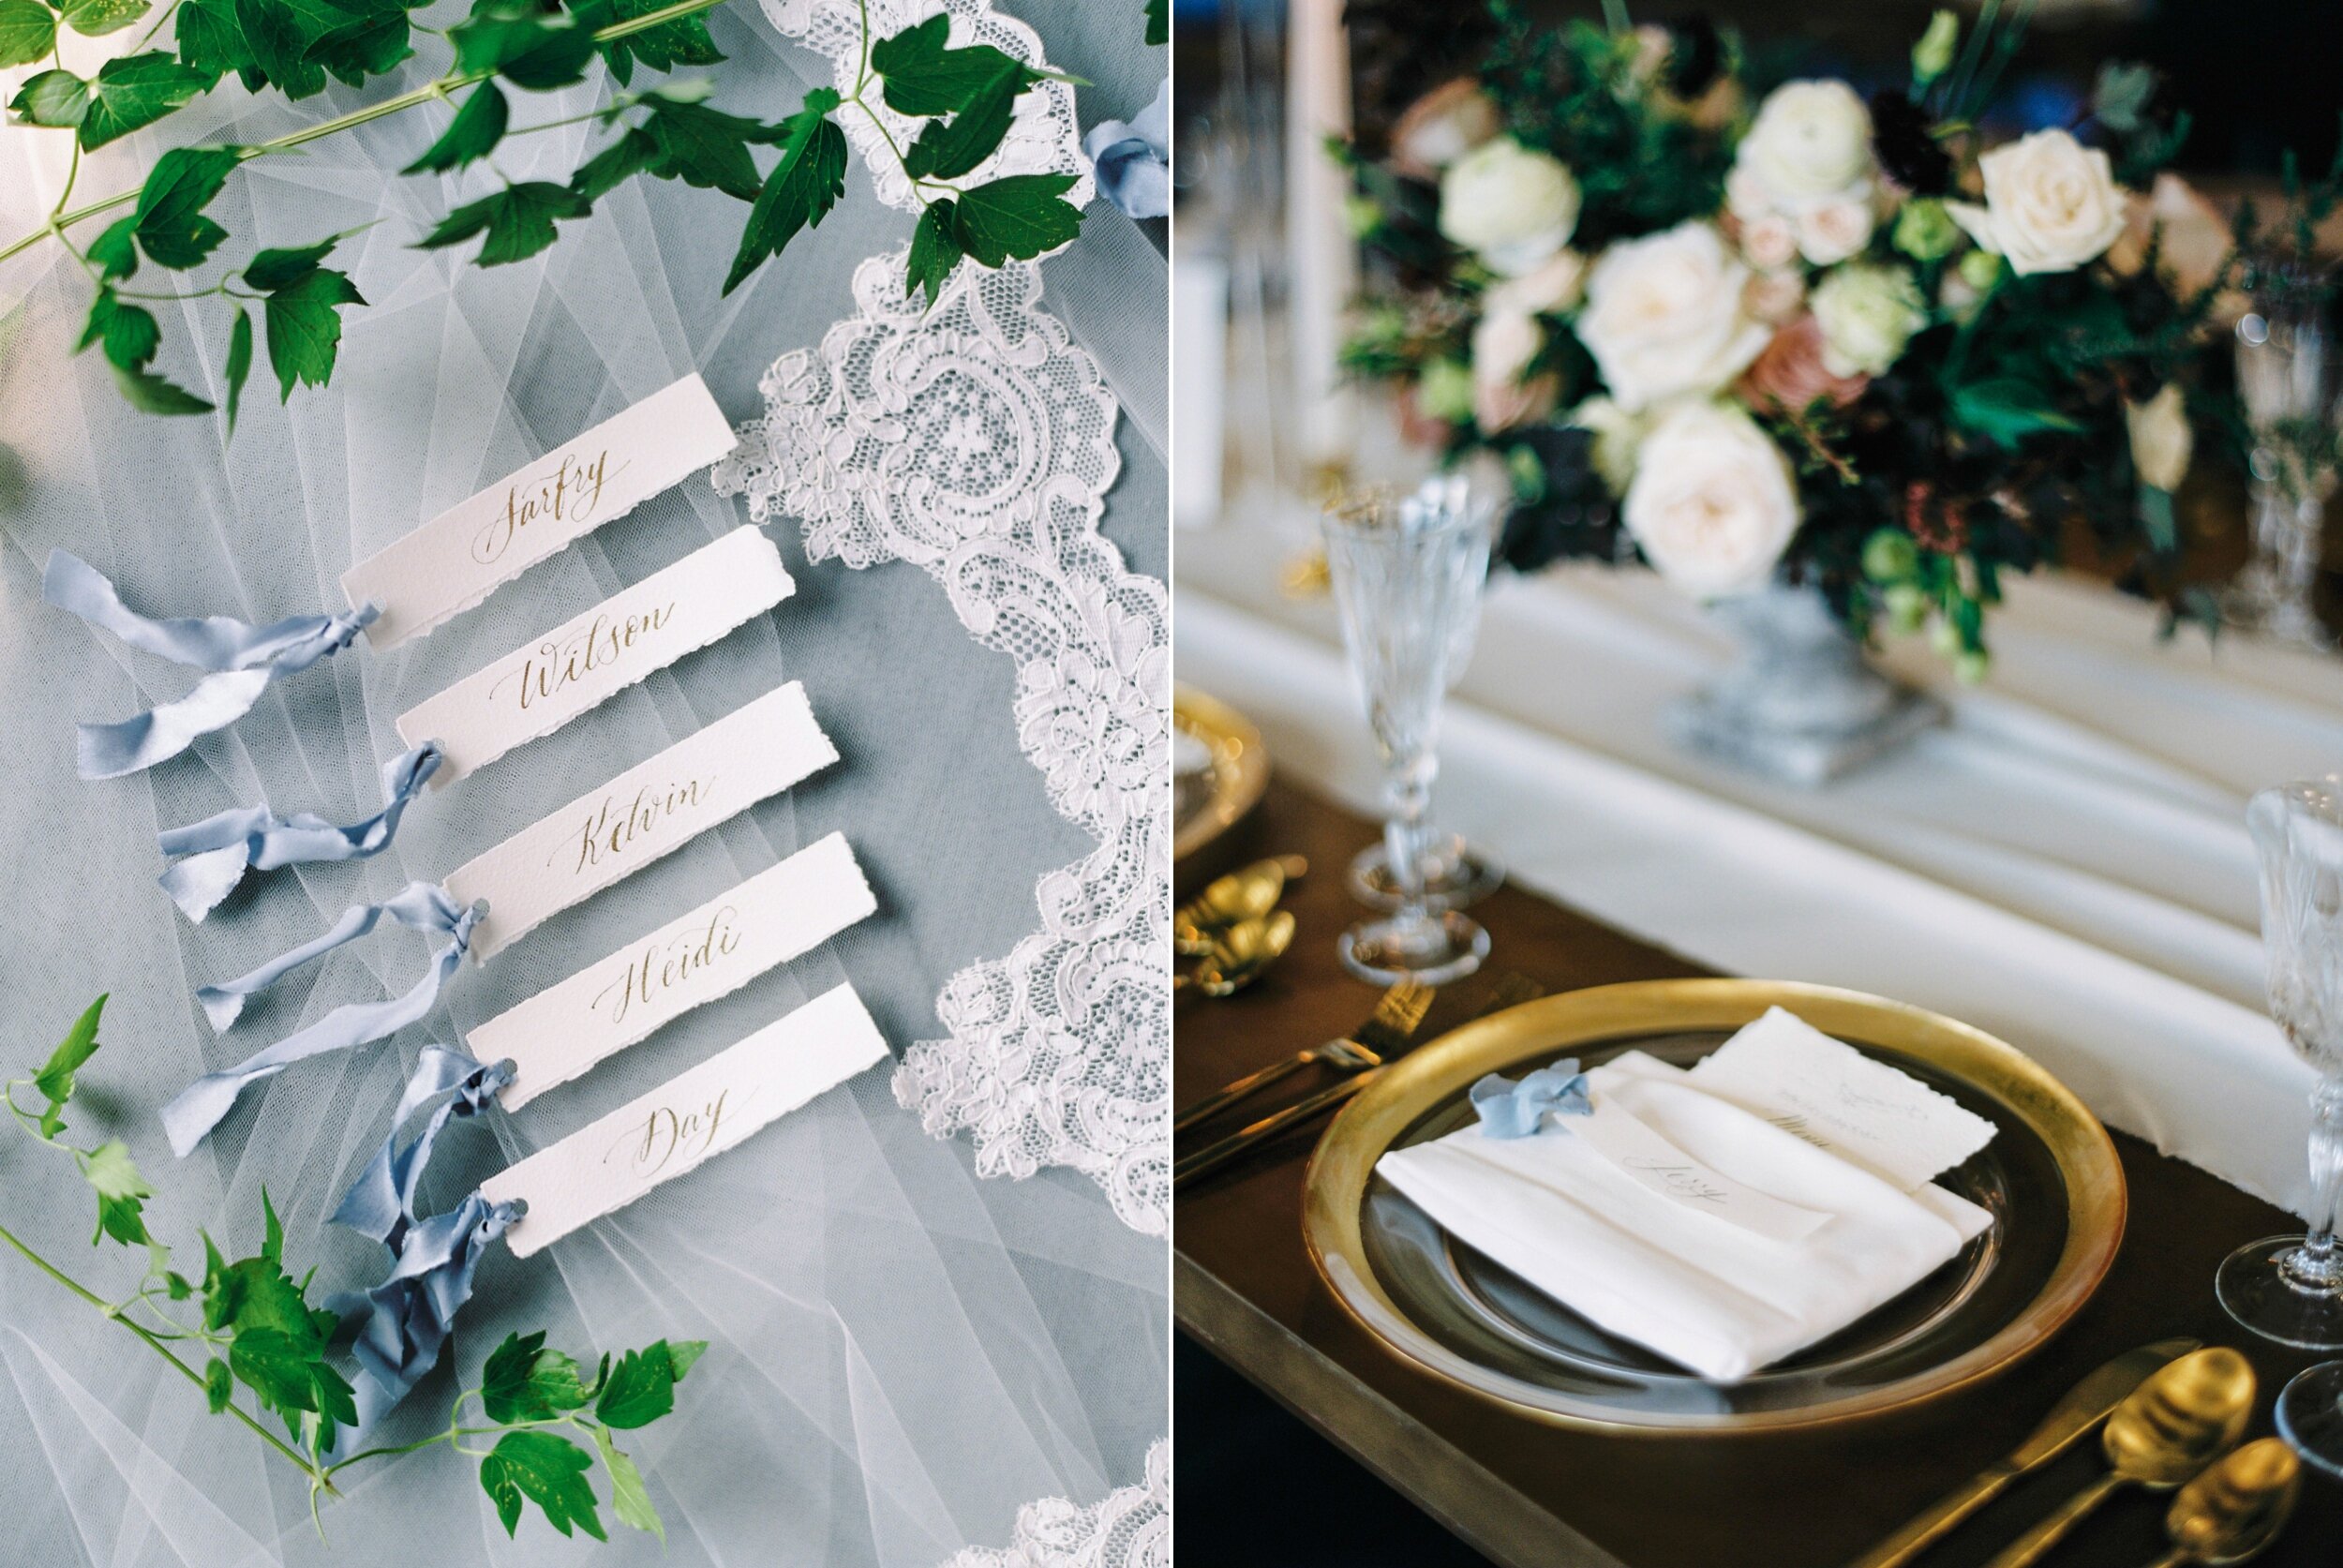  Lake Louise wedding photographers | Justine milton photography | fine art film destination wedding photographer | getting ready details wedding calligraphy place cards 